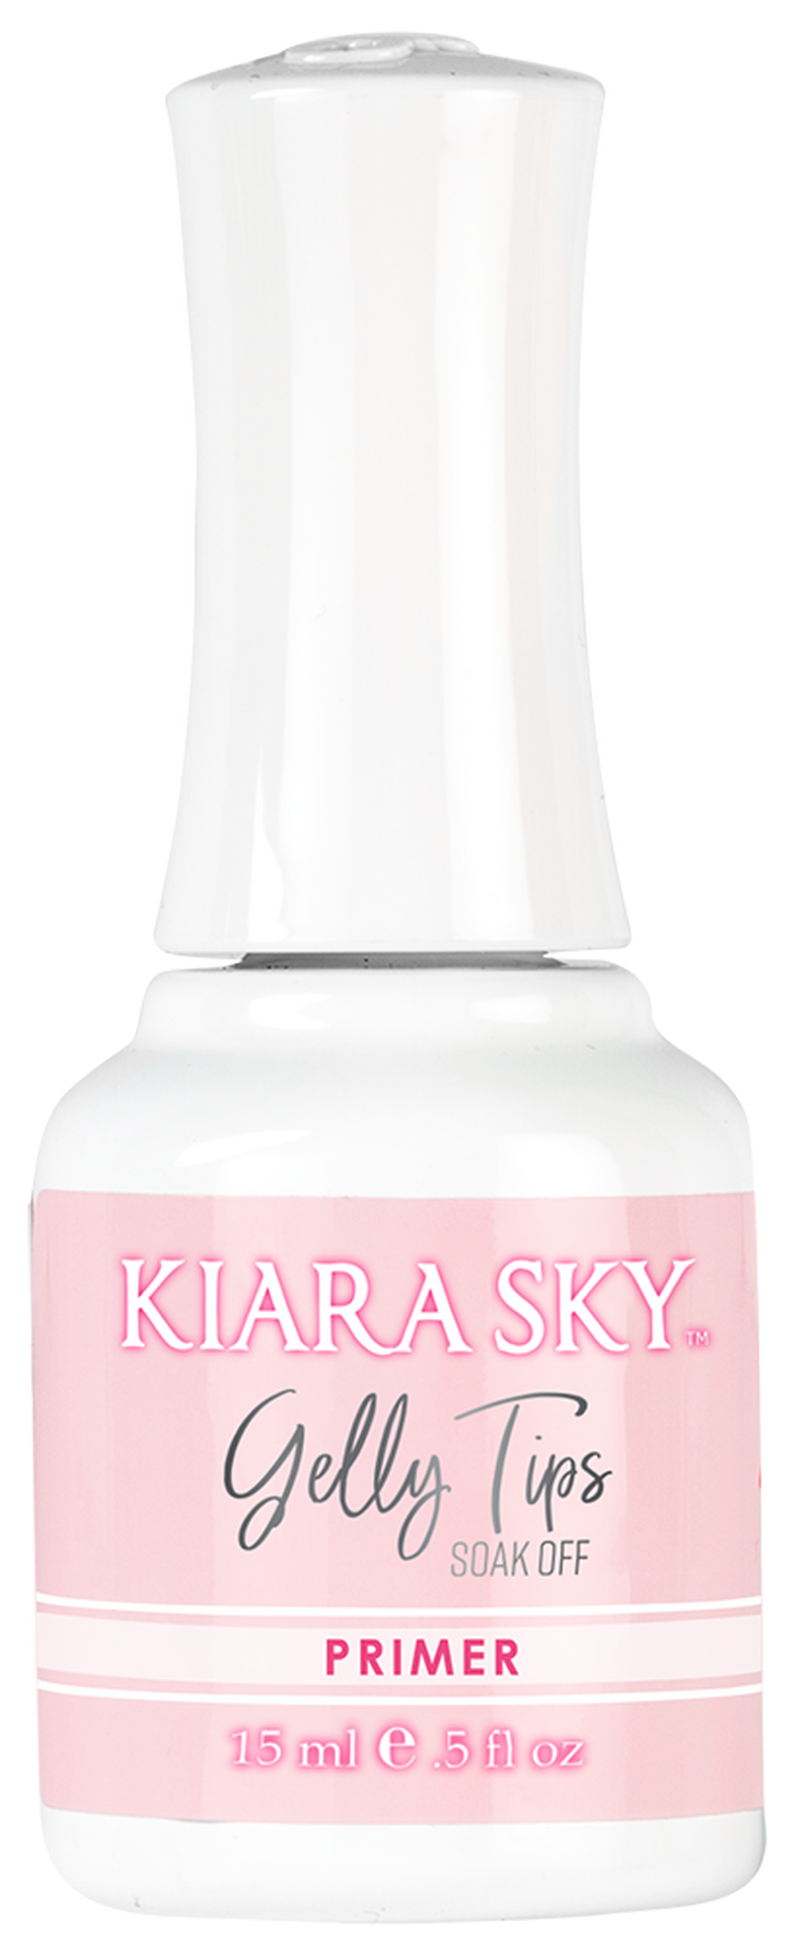 Kiara Sky Gelly Tips Essentials